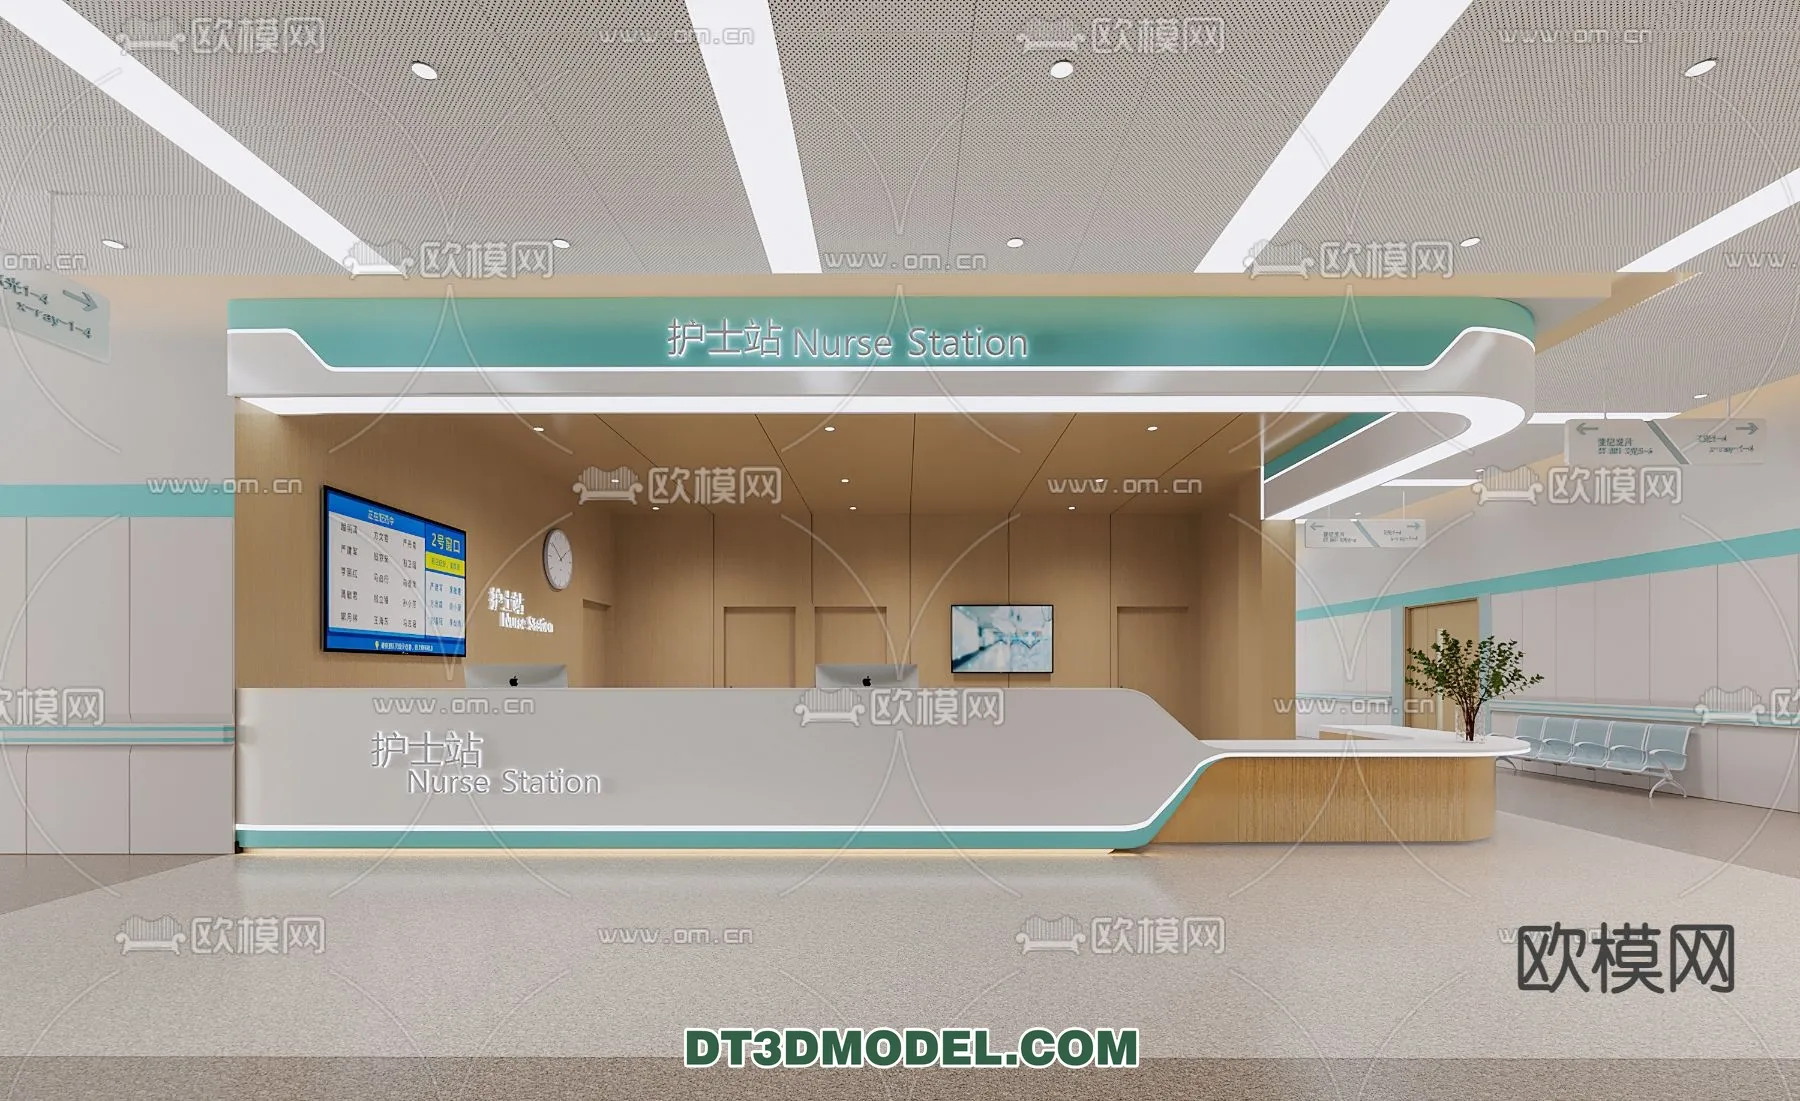 HOSPITAL 3D SCENES – MODERN – 0195